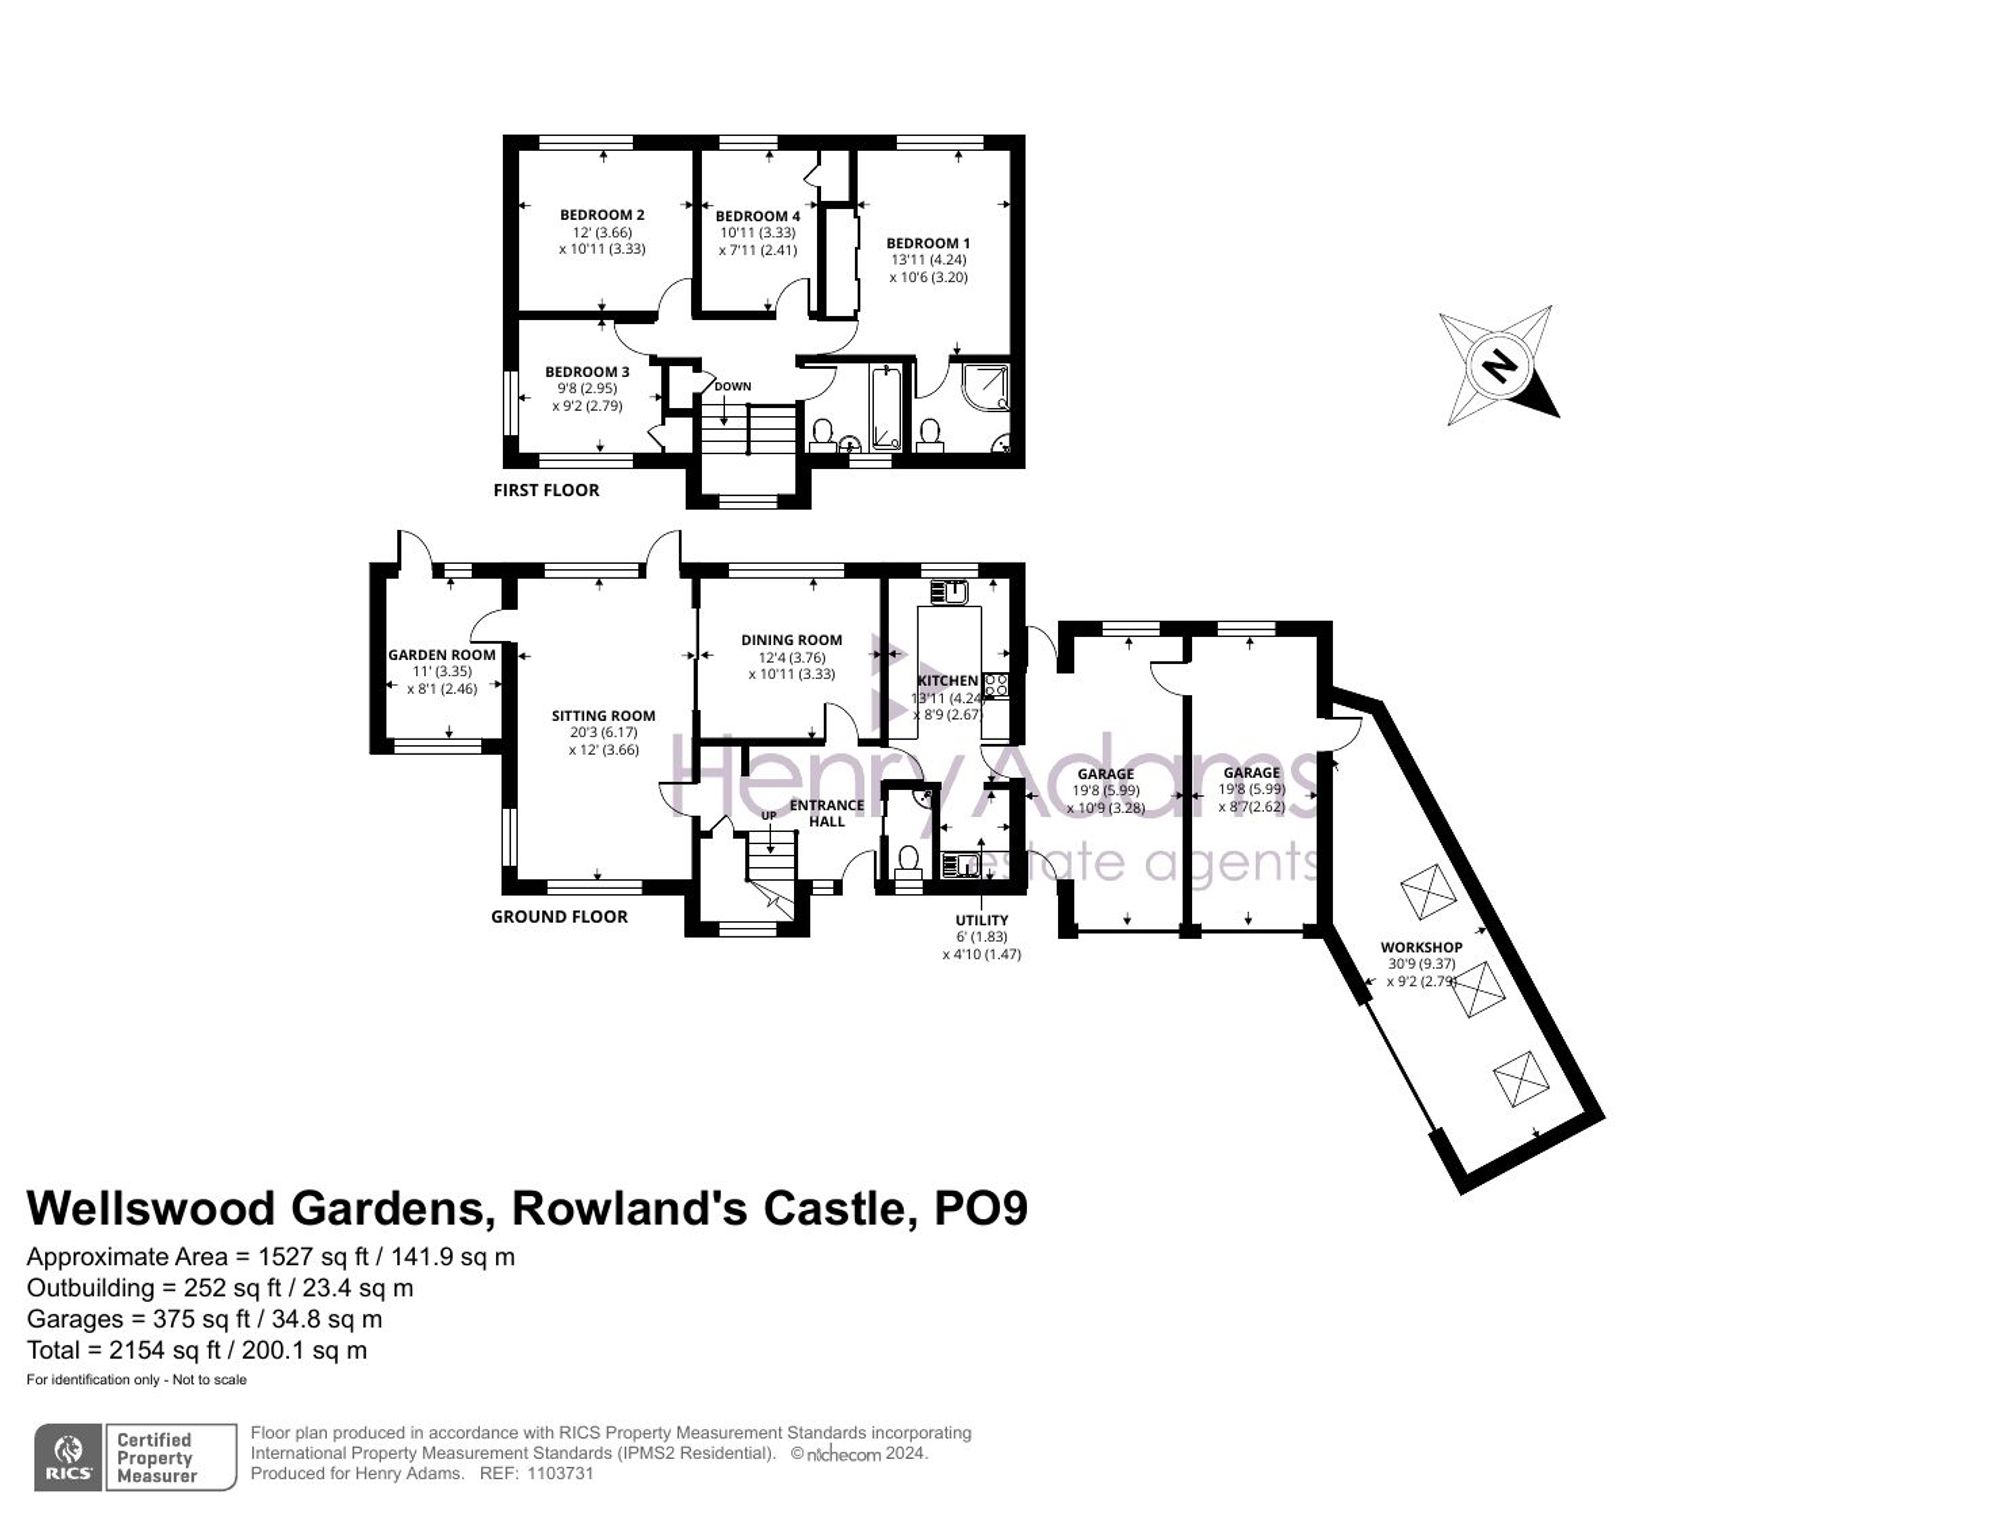 Wellswood Gardens, Rowland's Castle, PO9 floorplans